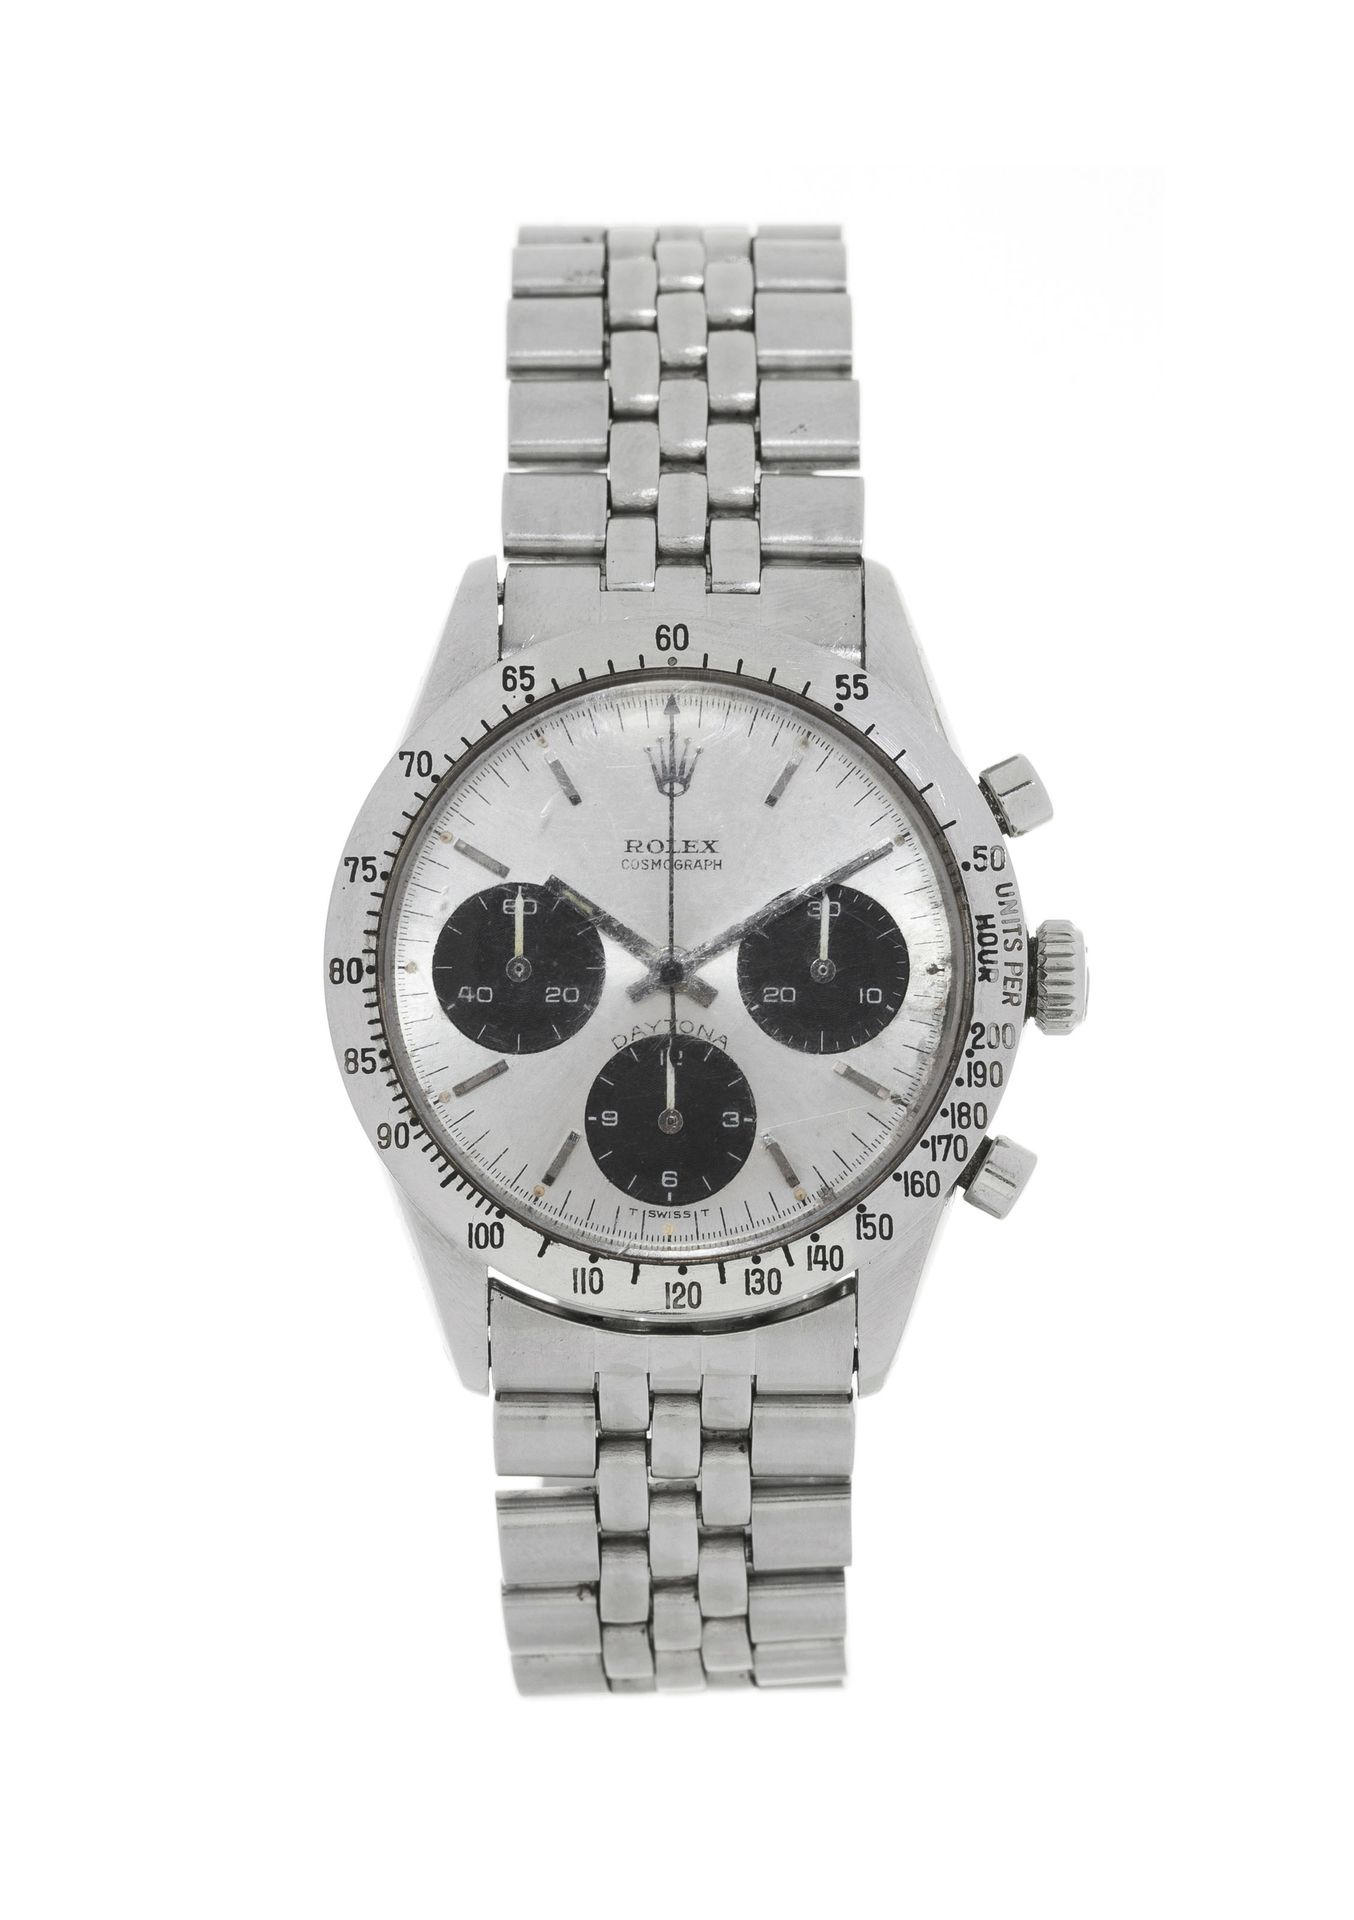 Null Rolex, Daytona, ref. 6262/6239, steel chronograph wristwatch, circa 1970